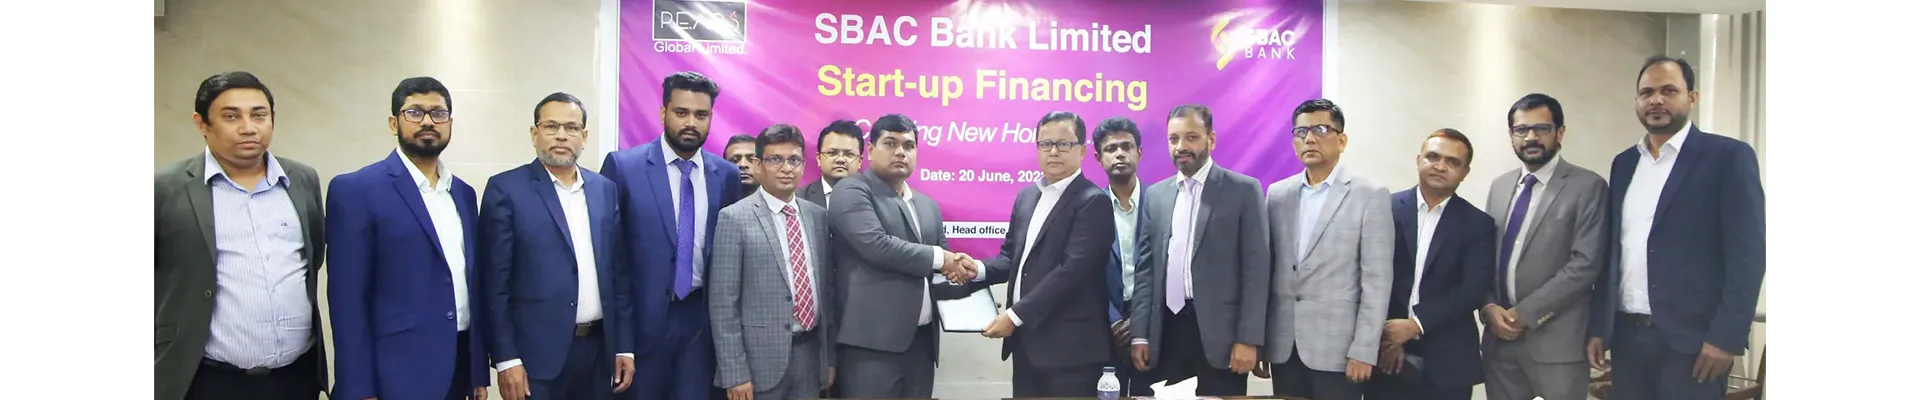 SBAC SBAC Bank Grants Tk. 70.00 Lac Loan to PEARS Global Limited